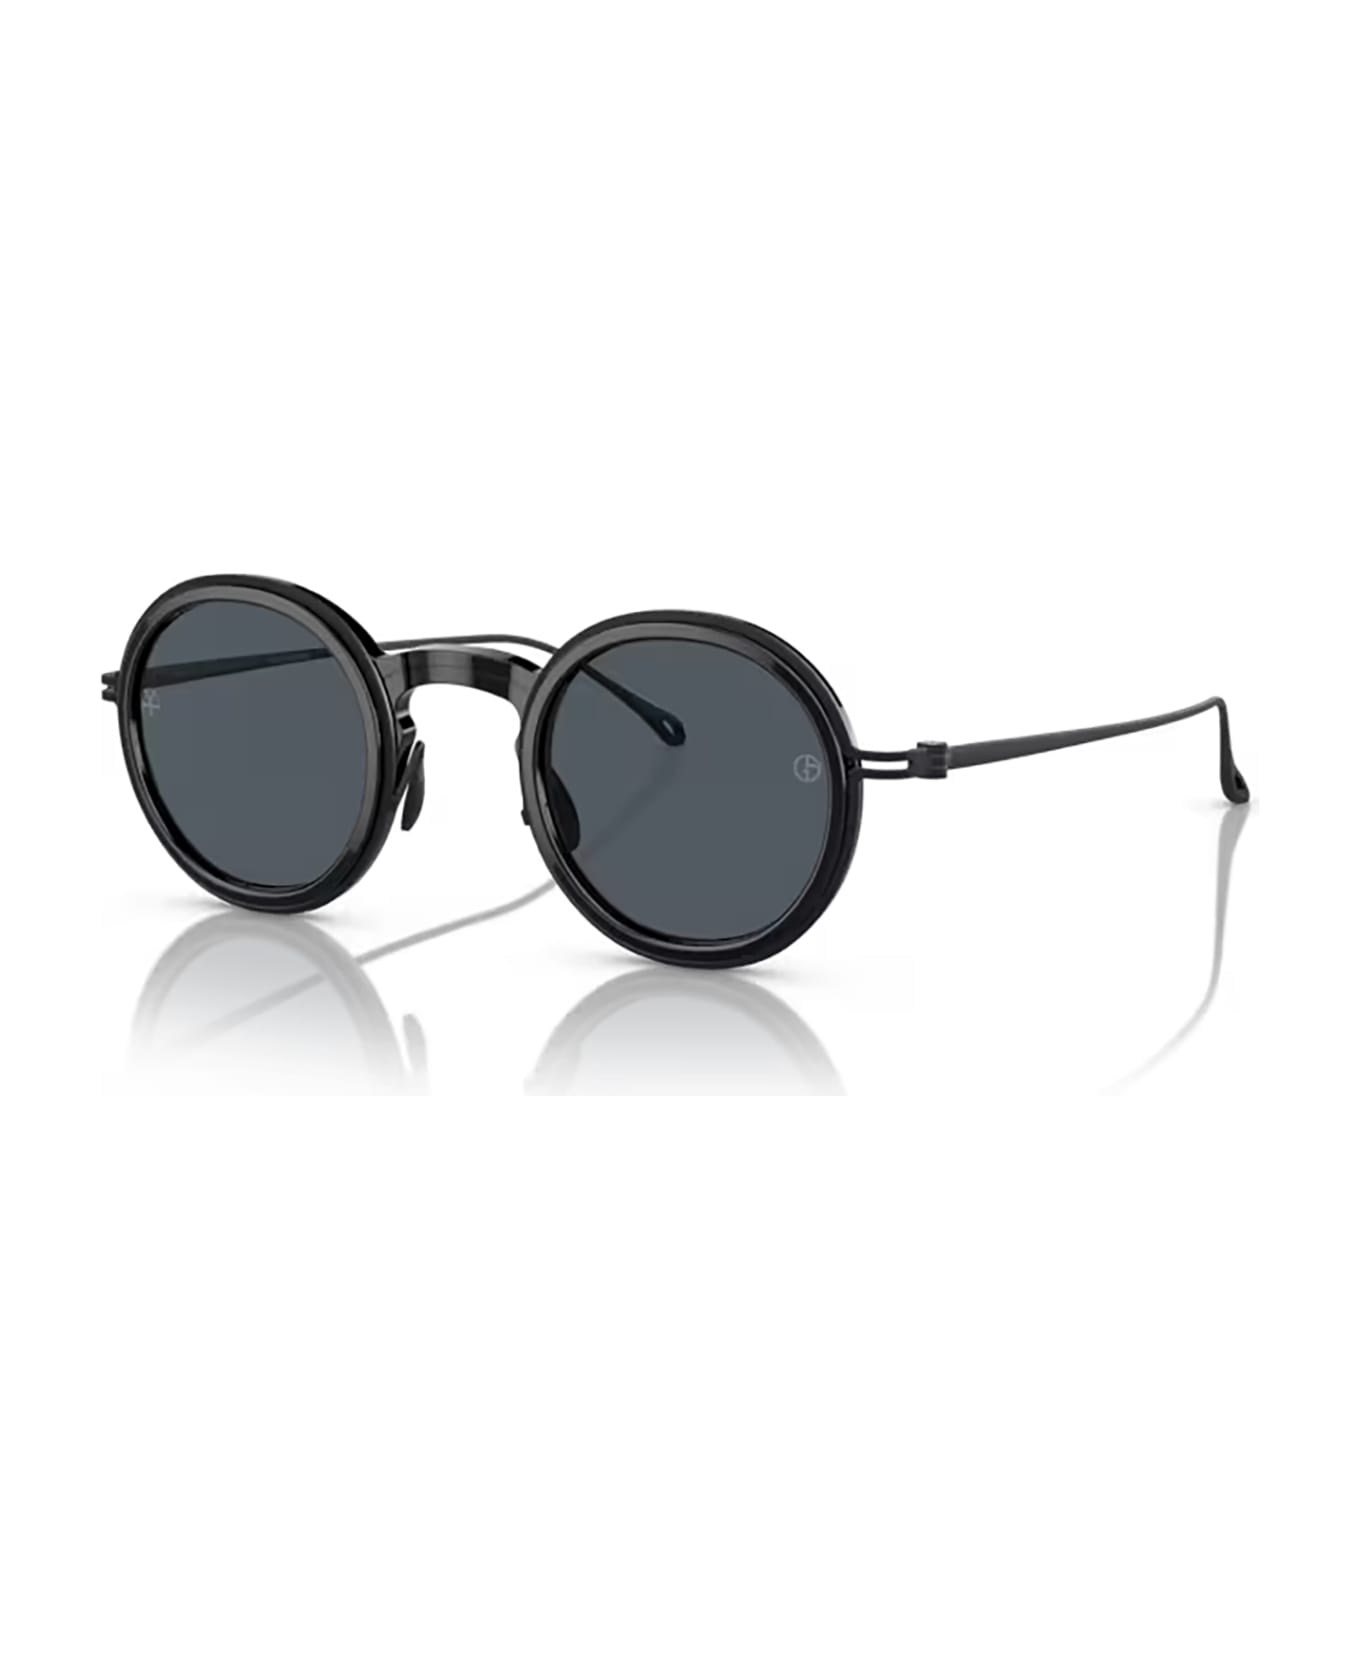 Giorgio Armani Ar6147t Shiny Black Sunglasses - Shiny Black